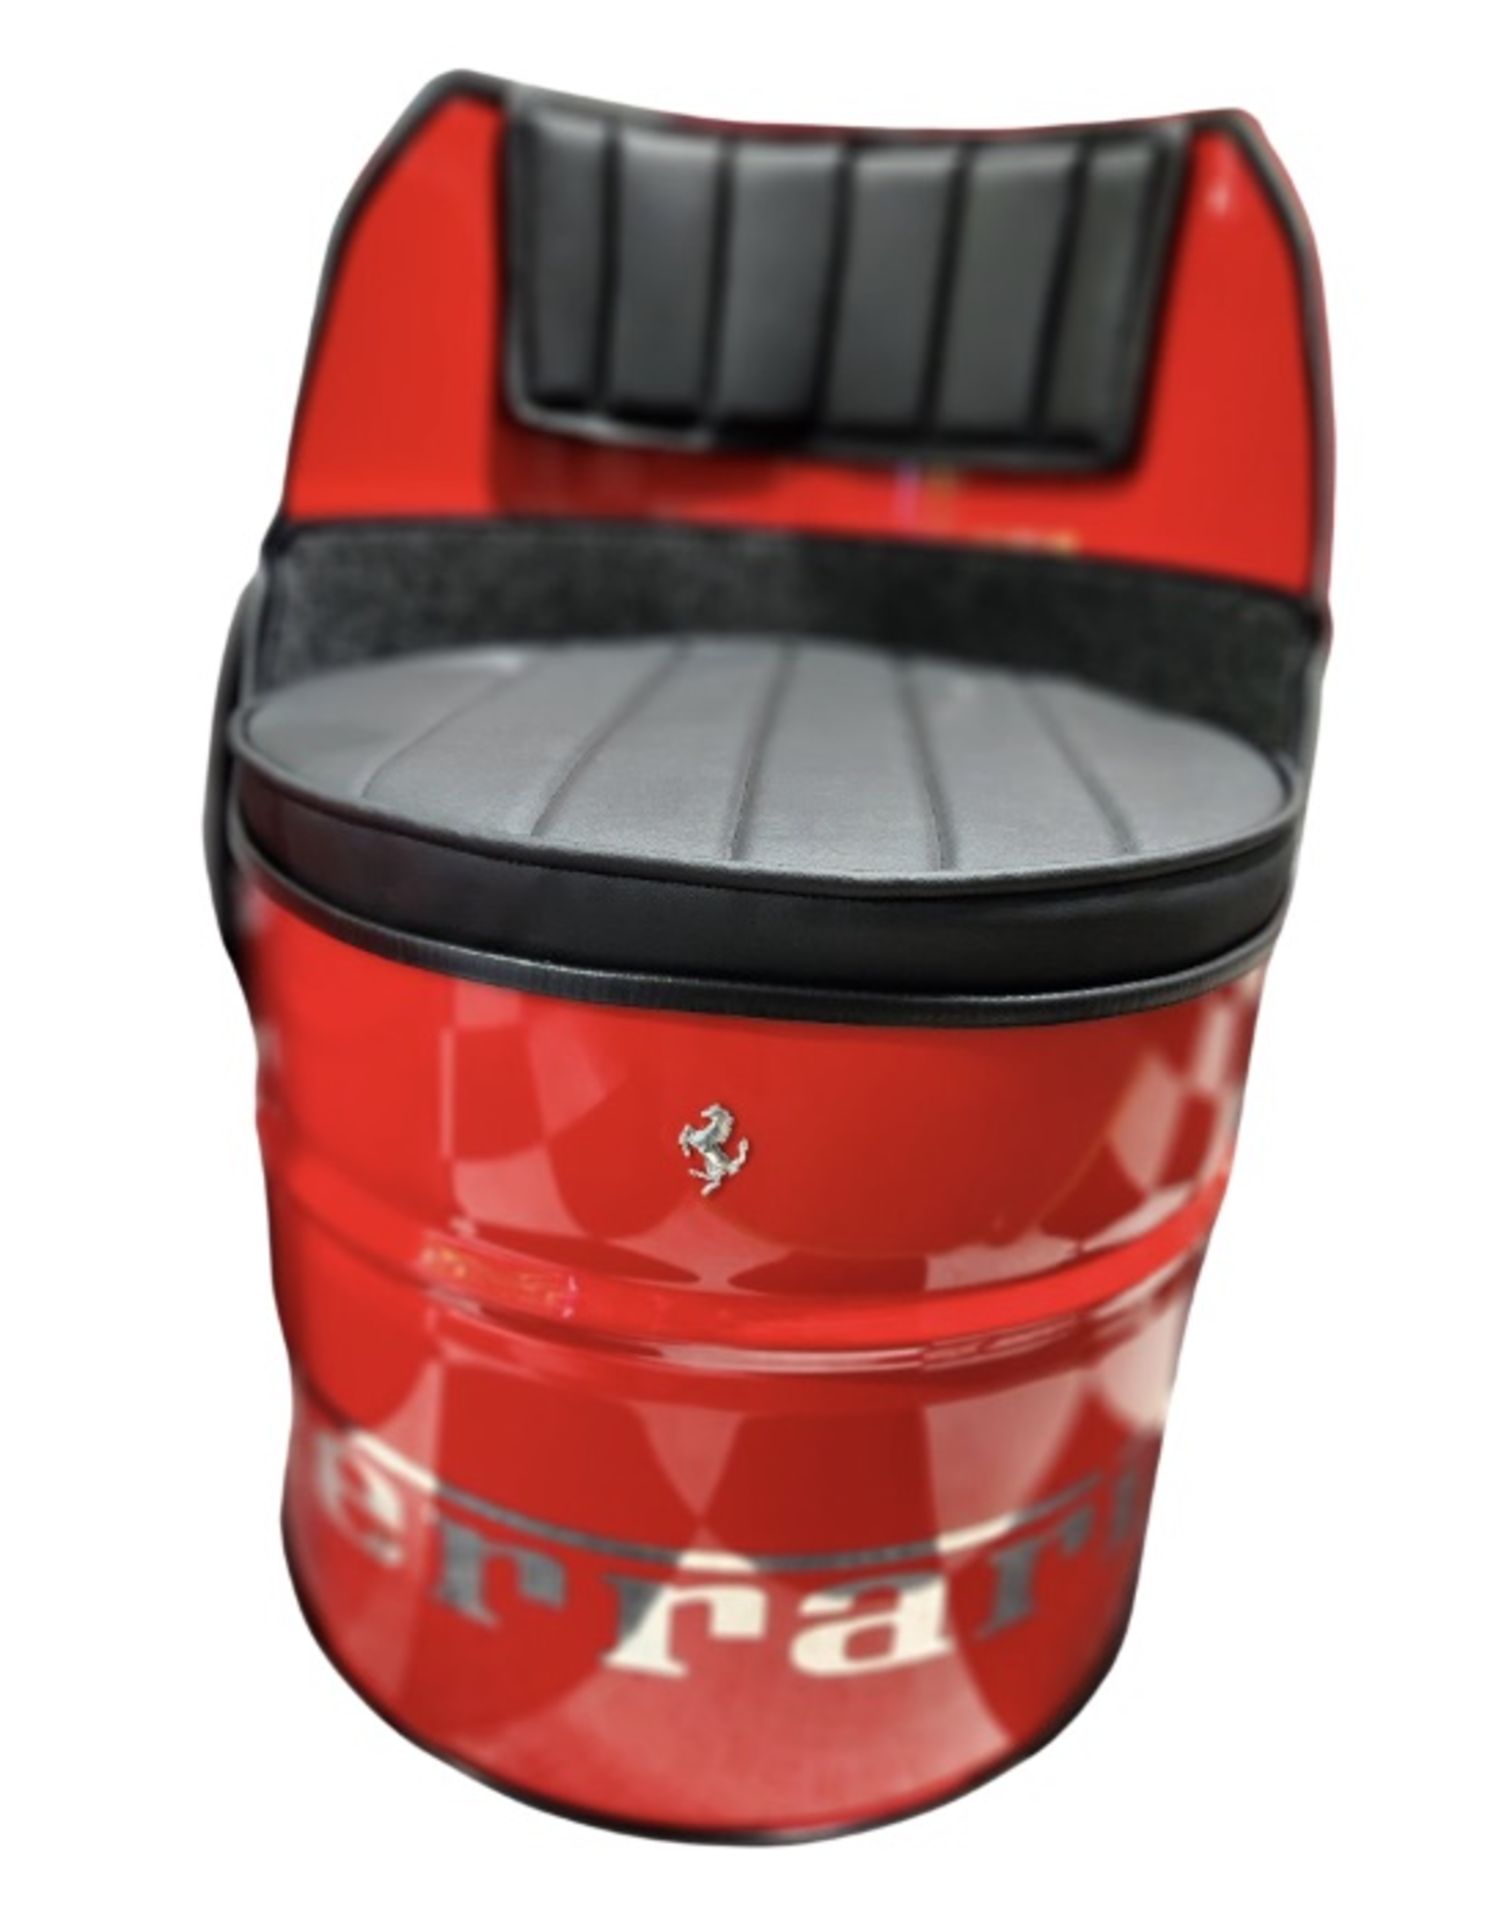 Ferrari Man Cave Garage Display Chair - Image 2 of 4